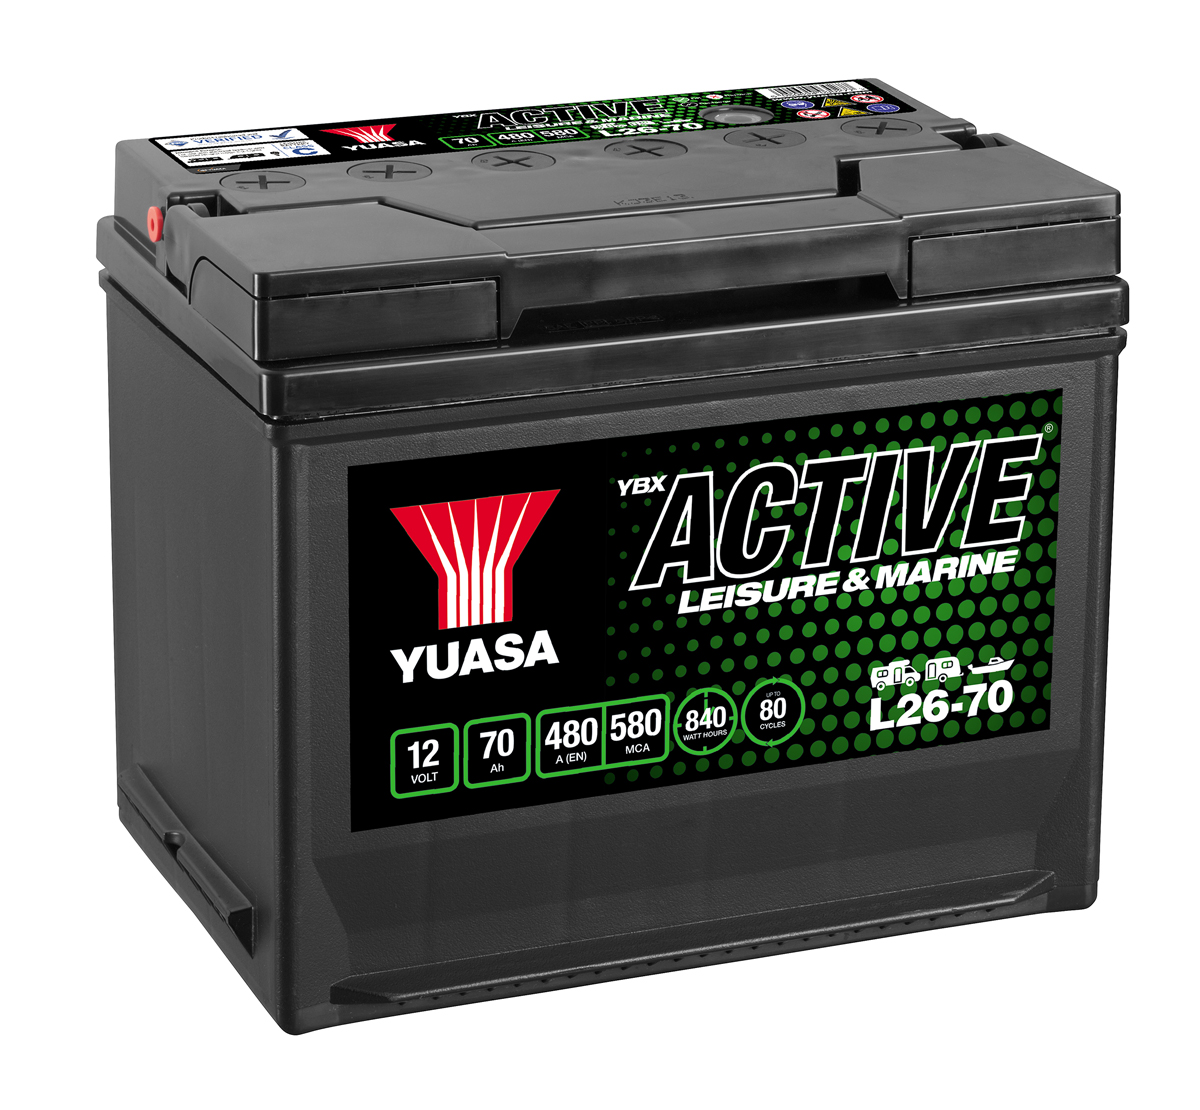 Yuasa YBX Active L26-70 Leisure Battery